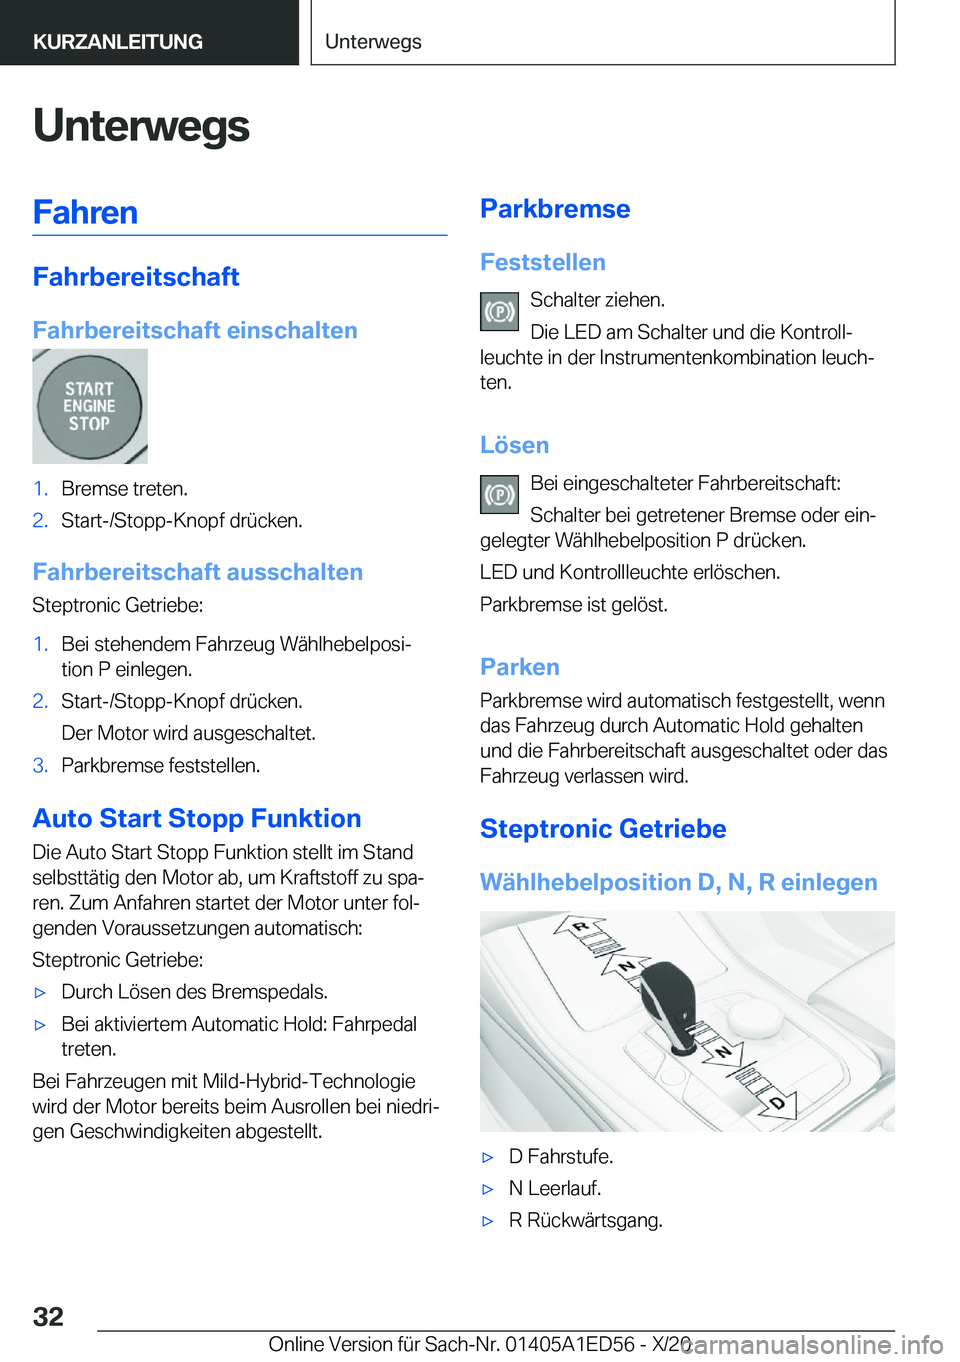 BMW 8 SERIES CONVERTIBLE 2021  Betriebsanleitungen (in German) �U�n�t�e�r�w�e�g�s�F�a�h�r�e�n
�F�a�h�r�b�e�r�e�i�t�s�c�h�a�f�t
�F�a�h�r�b�e�r�e�i�t�s�c�h�a�f�t��e�i�n�s�c�h�a�l�t�e�n
�1�.�B�r�e�m�s�e��t�r�e�t�e�n�.�2�.�S�t�a�r�t�-�/�S�t�o�p�p�-�K�n�o�p�f��d�r�